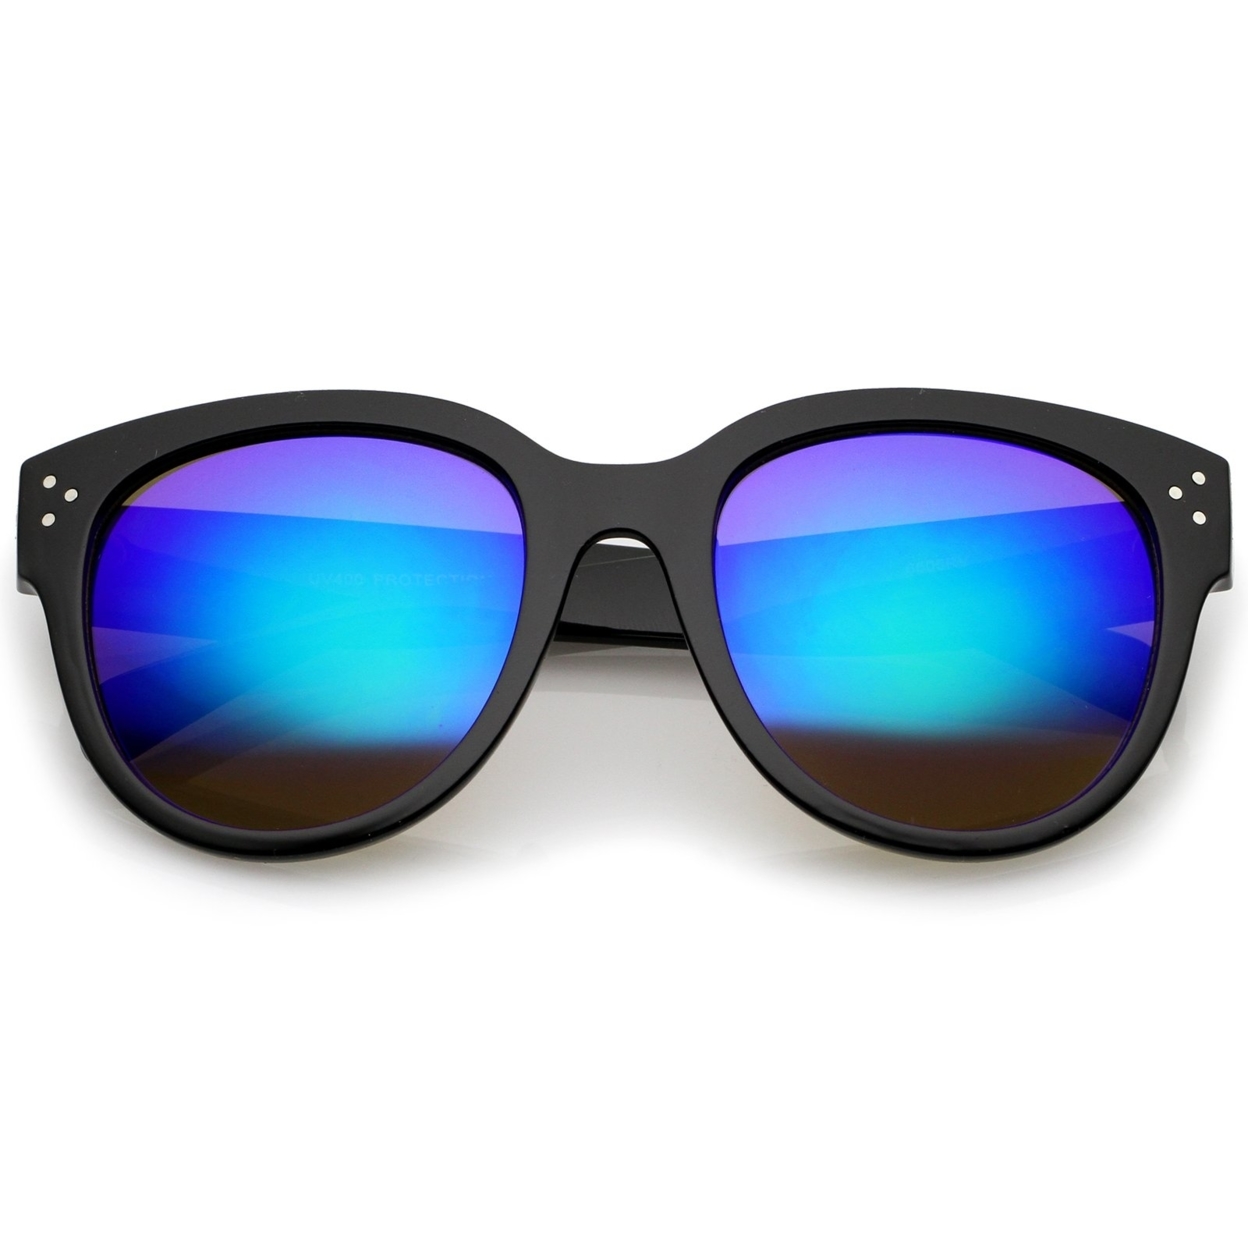 Women's Oversize Horn Rimmed Colored Mirror Lens Cat Eye Sunglasses 56mm - Black / Magenta-Green Mirror